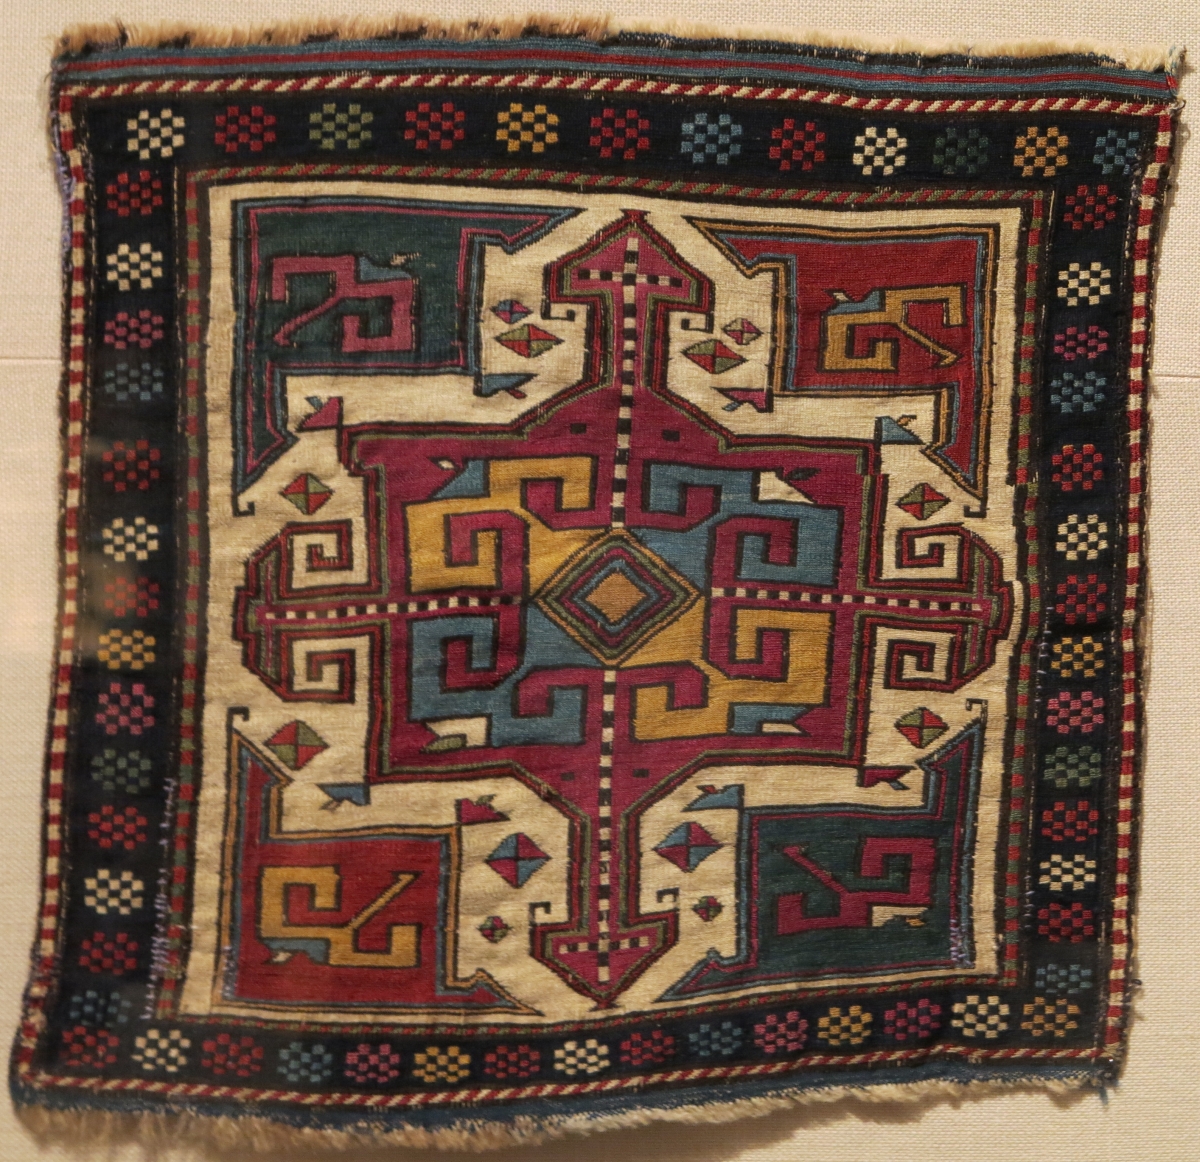 Shahsevan sumak cross bag, Moghan-Savlan region, Ginsberg Collection, Metropolitan Museum of Art